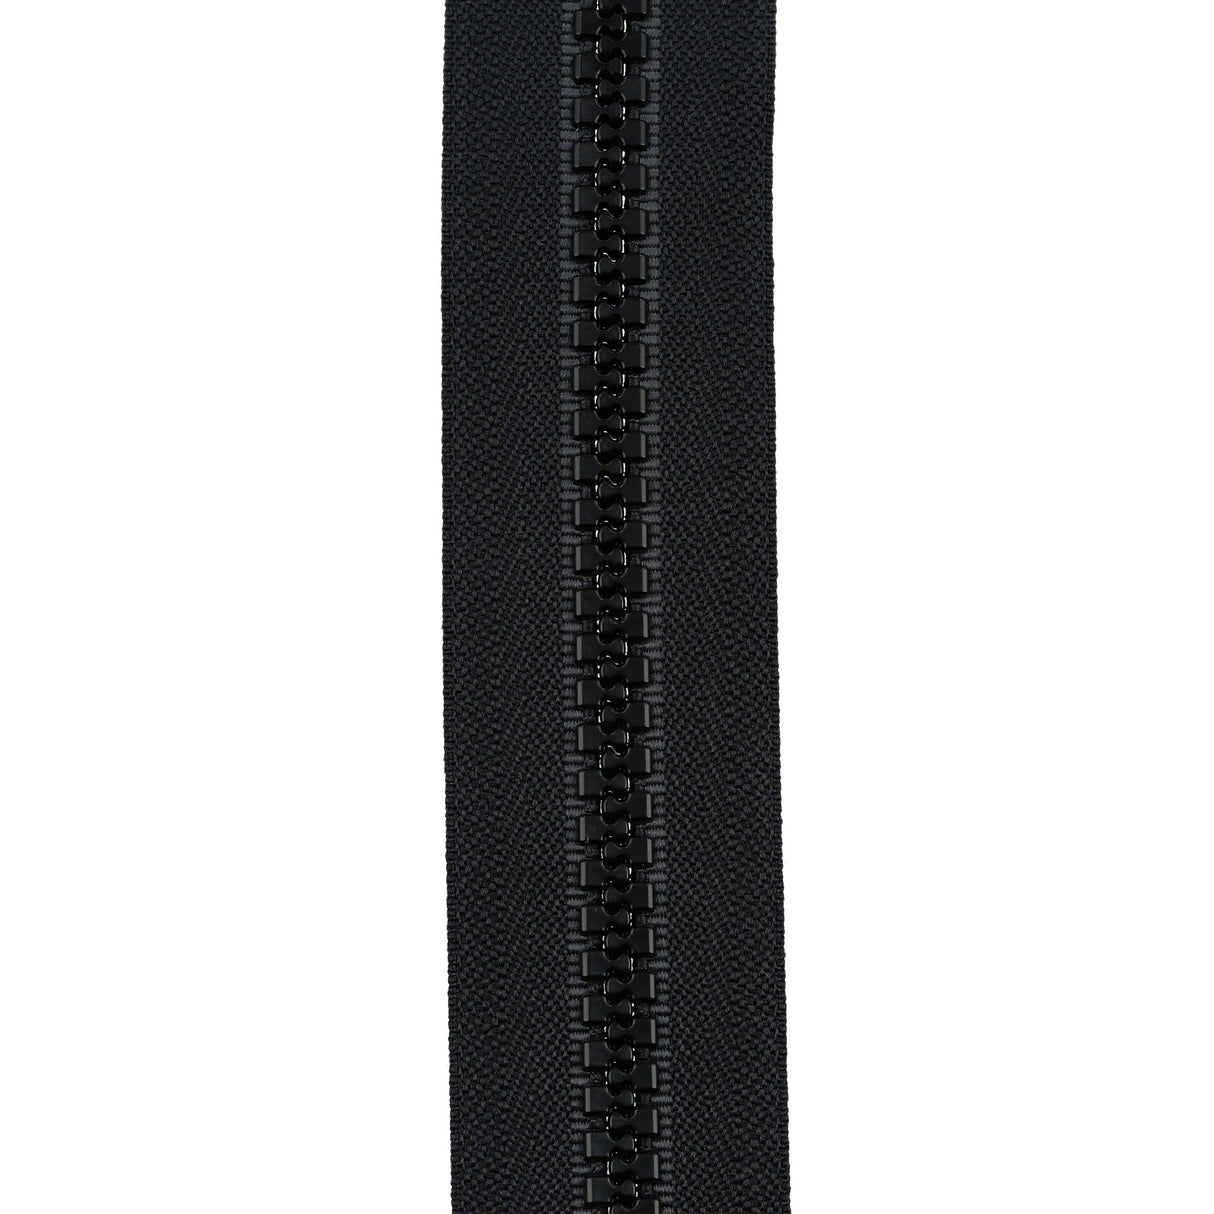 Ohio Travel Bag Zippers #10 Vislon Reversible Zipper 72in Black, #10VRV-72-BLK 10VRV-72-BLK